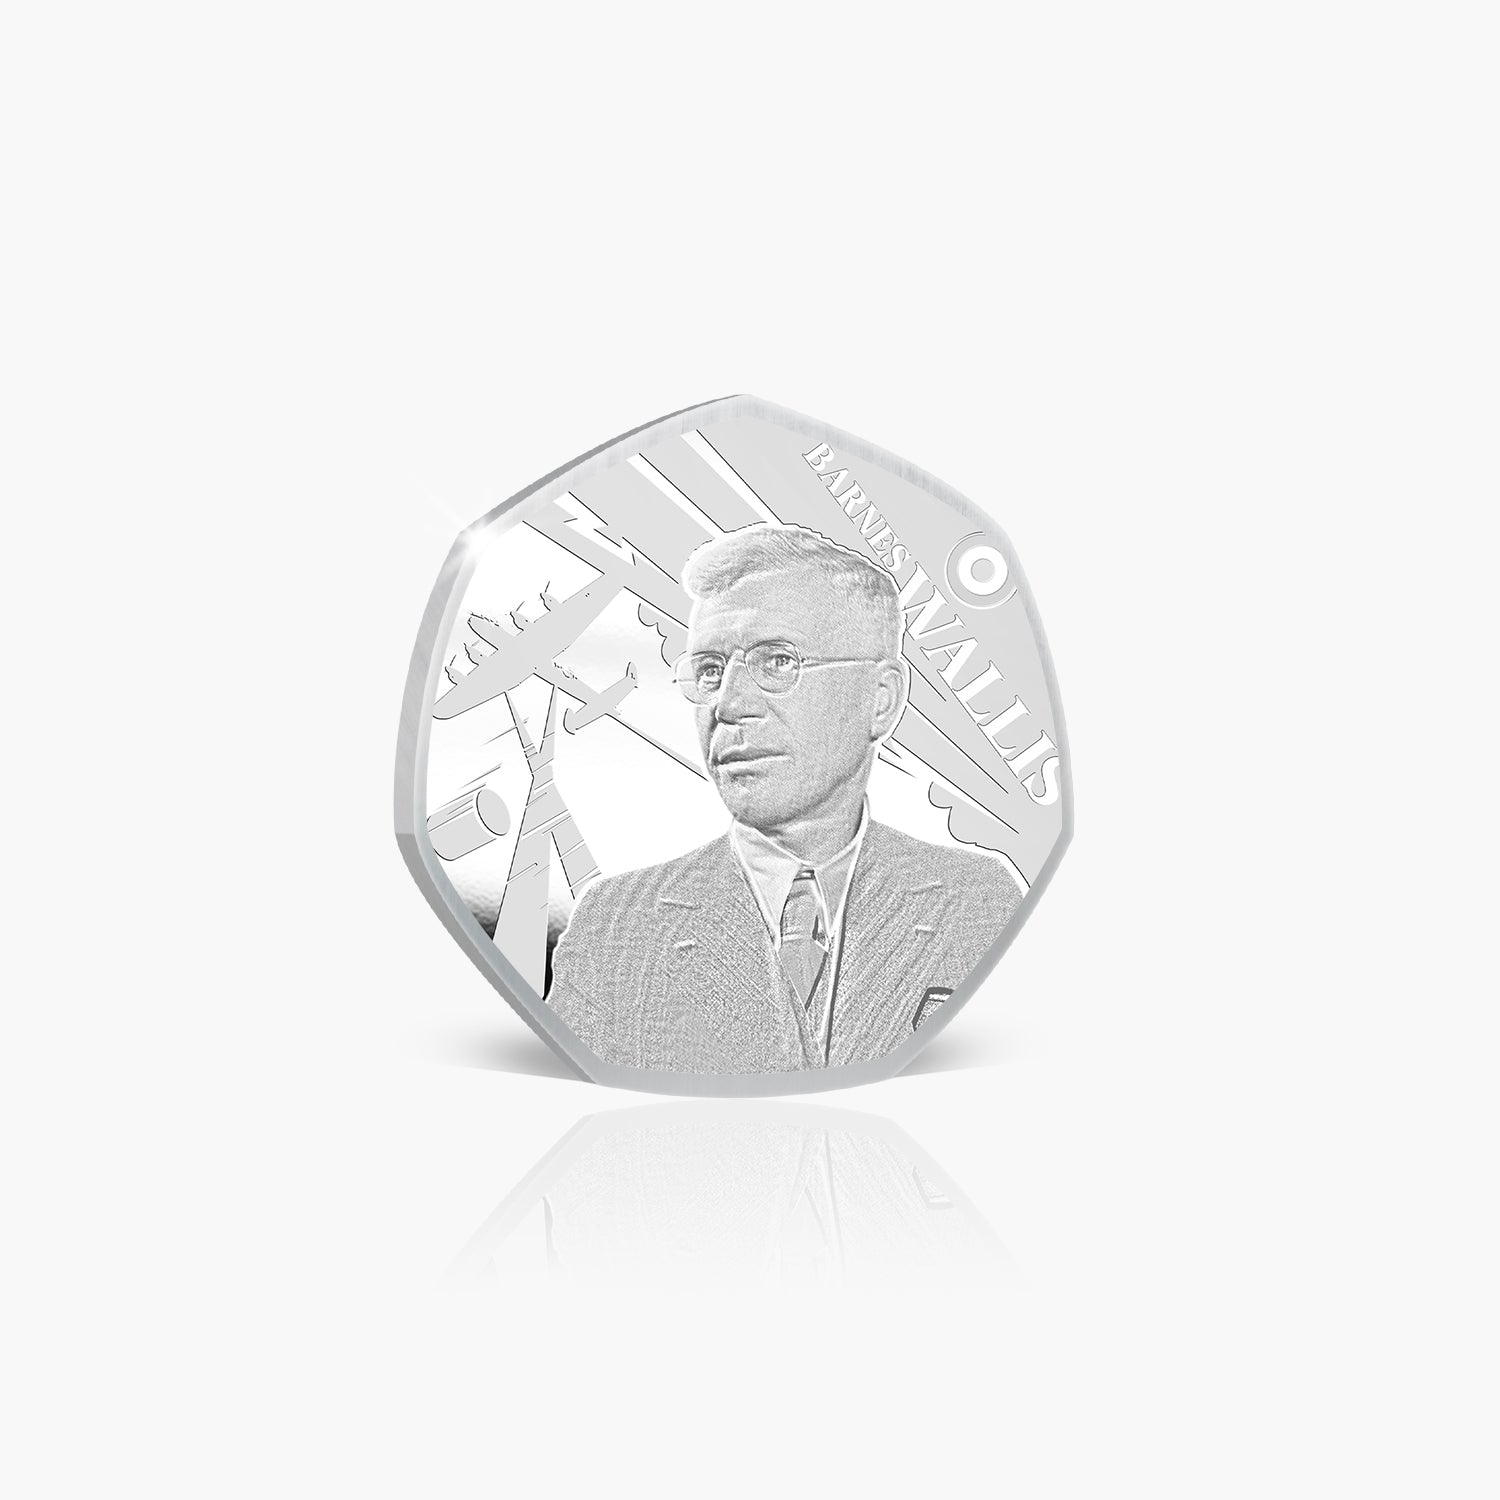 Dambusters 80th - Barnes Wallis 50p Brilliant Uncirculated Coin 2023